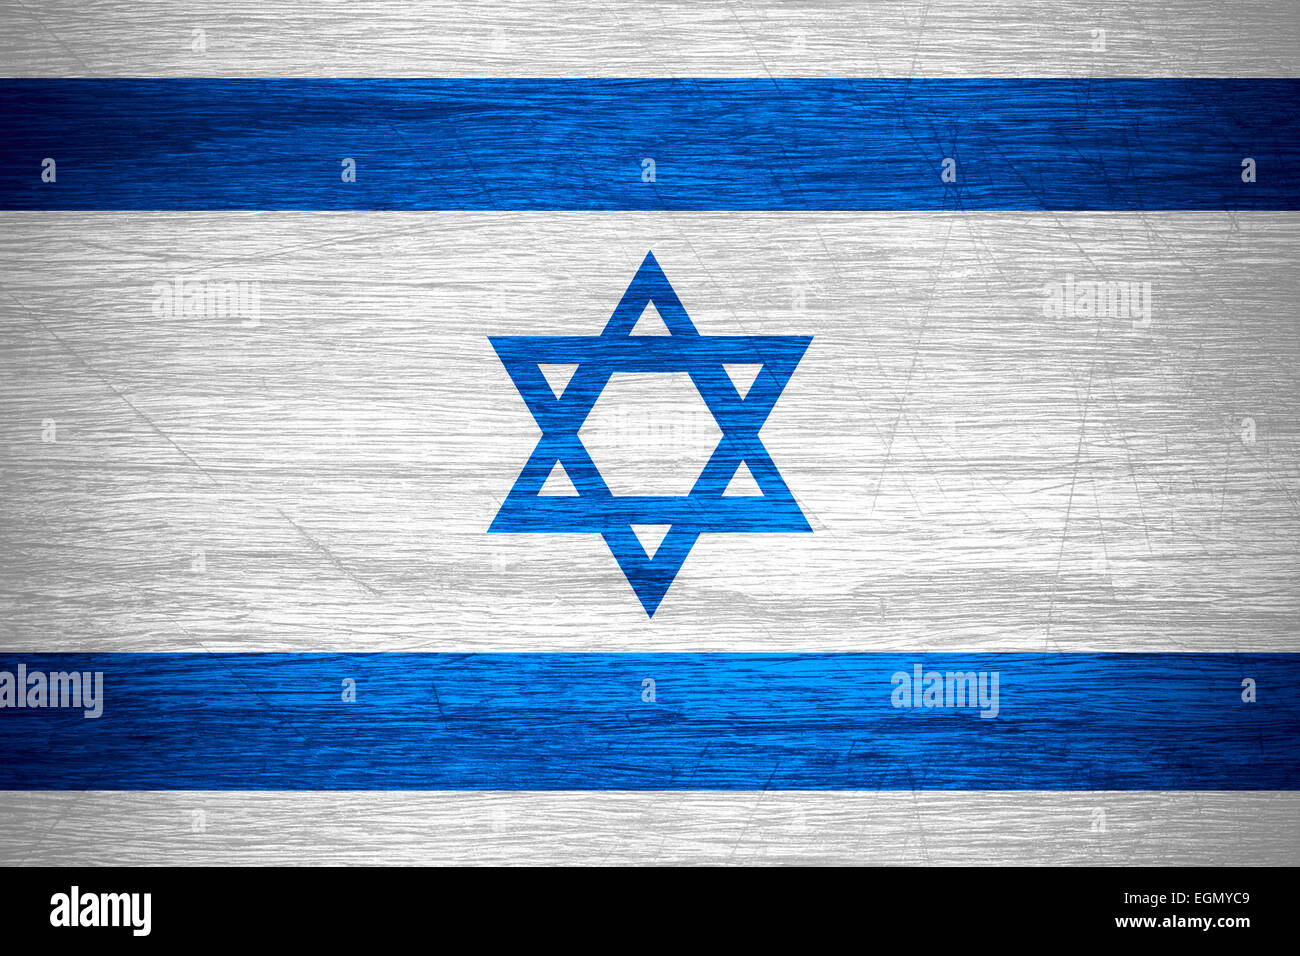 Israel flag or Israeli banner on wooden texture Stock Photo